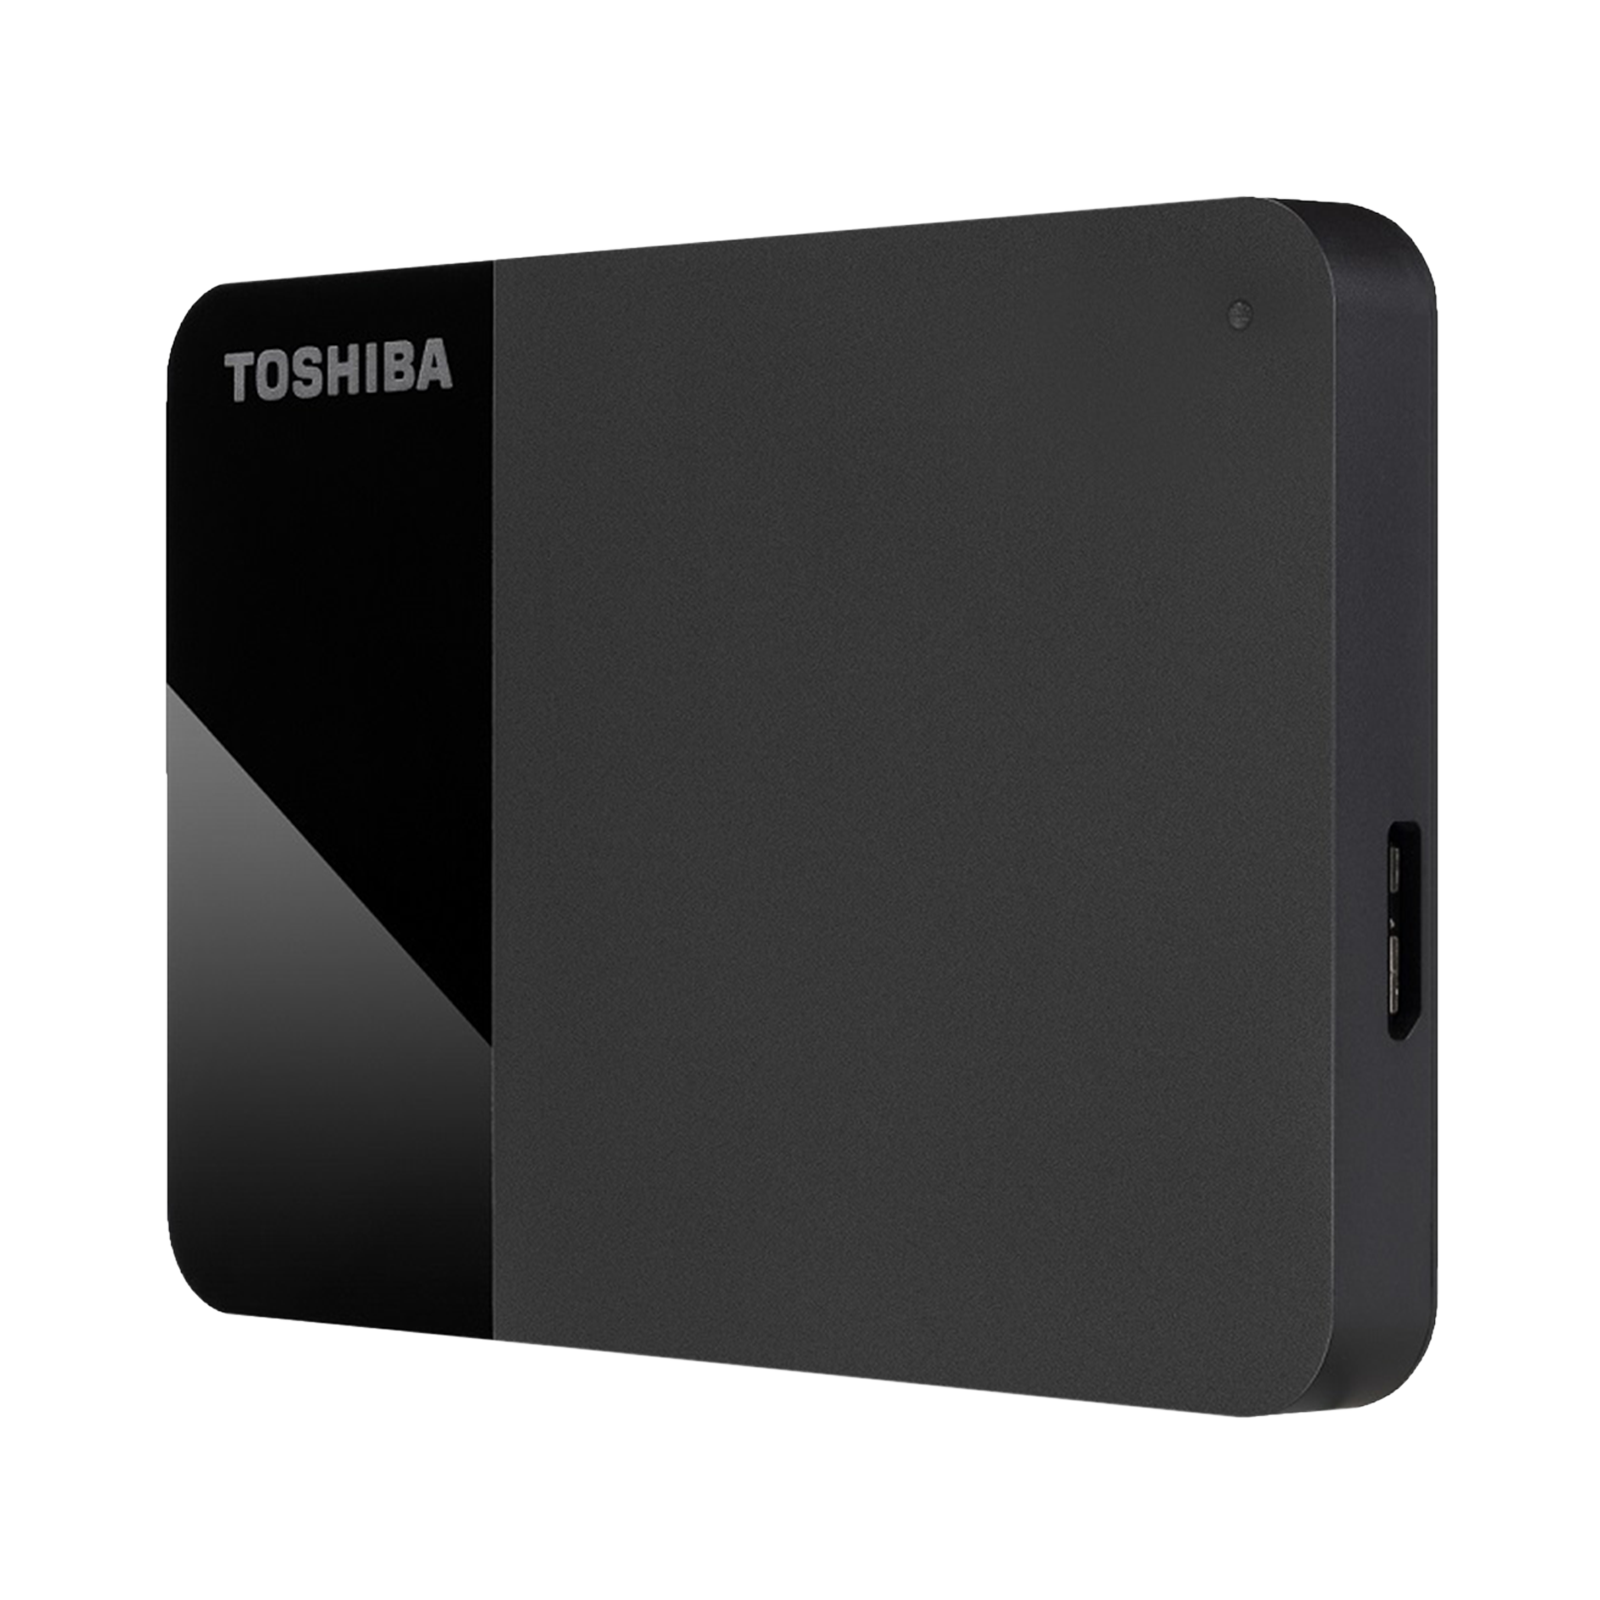 TOSHIBA Canvio Ready 1TB USB 3.0 Hard Drive Setup, HDTP310AK3AA, Black) Online - Croma